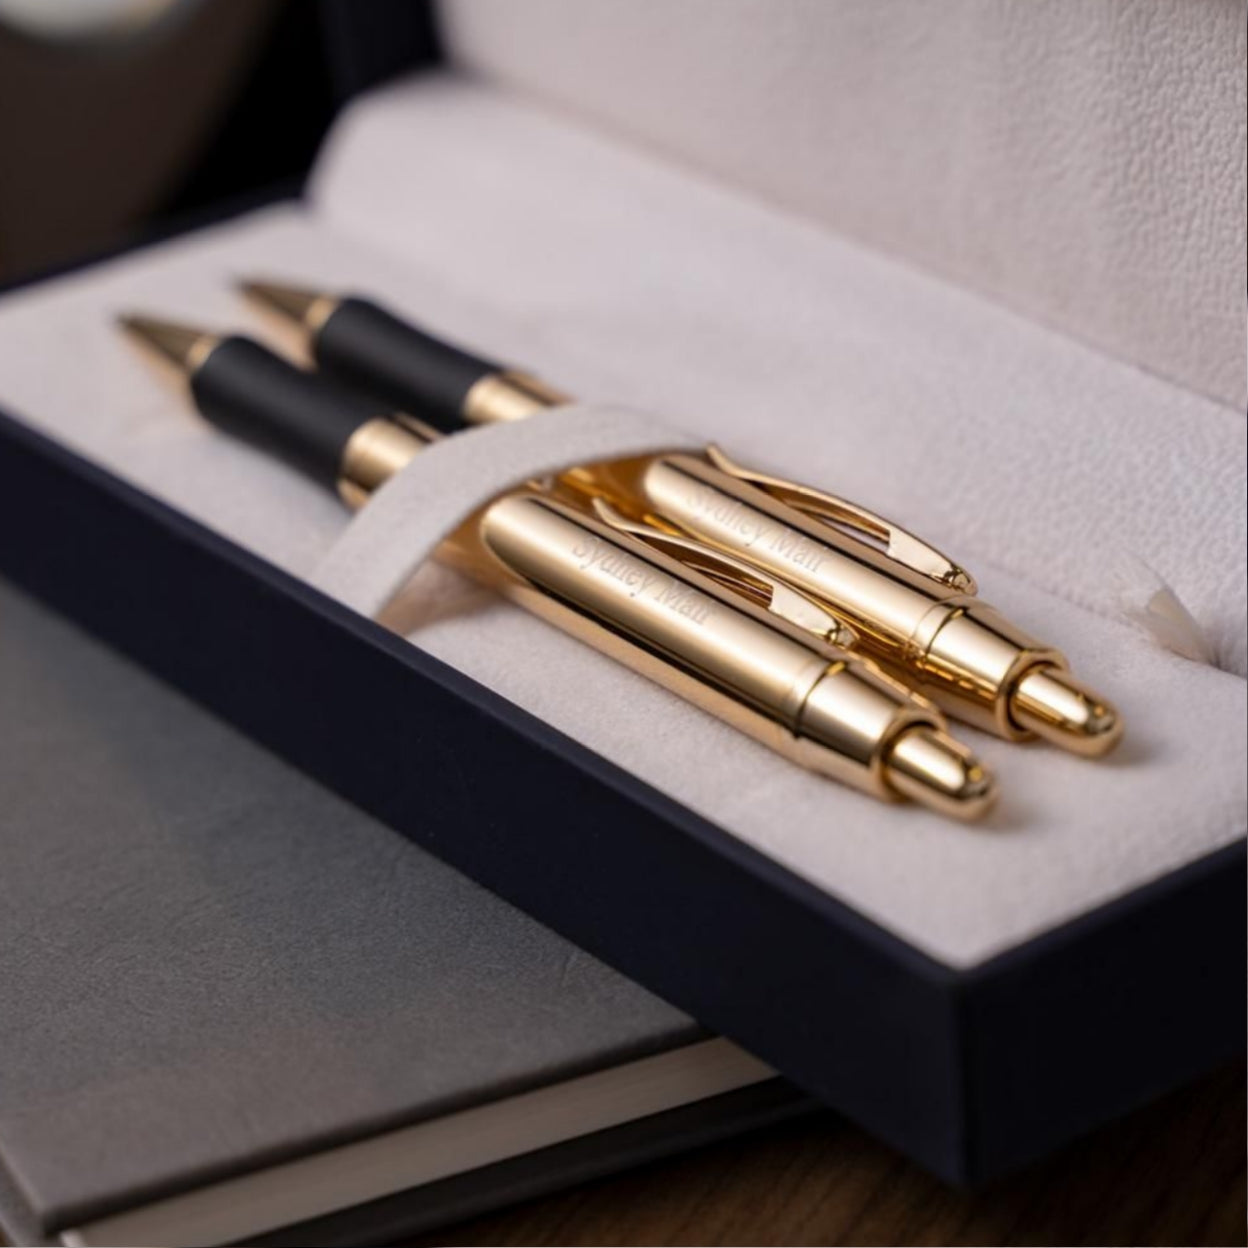 Personalized Gold Pens - 100% Free Engraving - Dayspring Pens